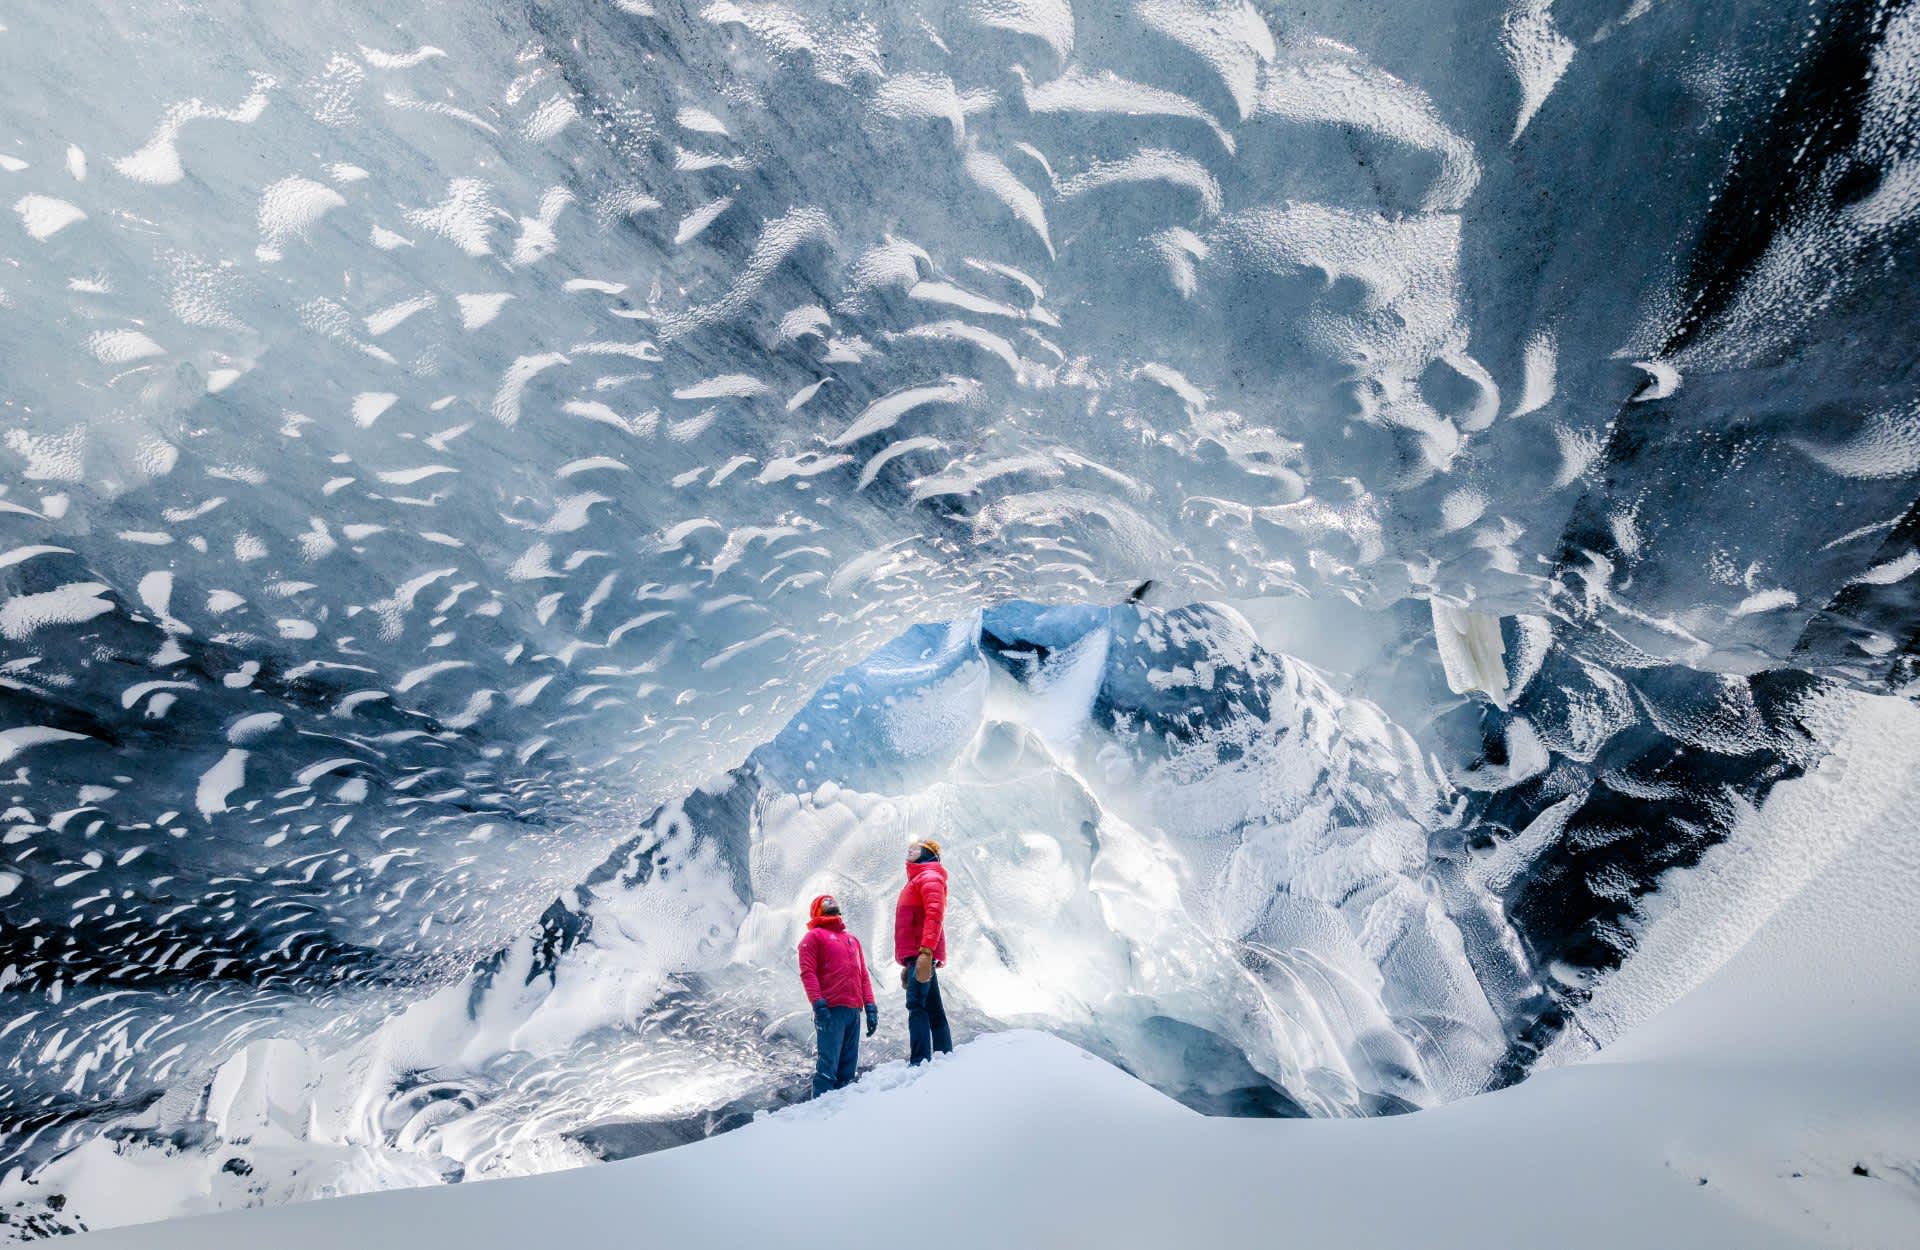 Askur ice cave header